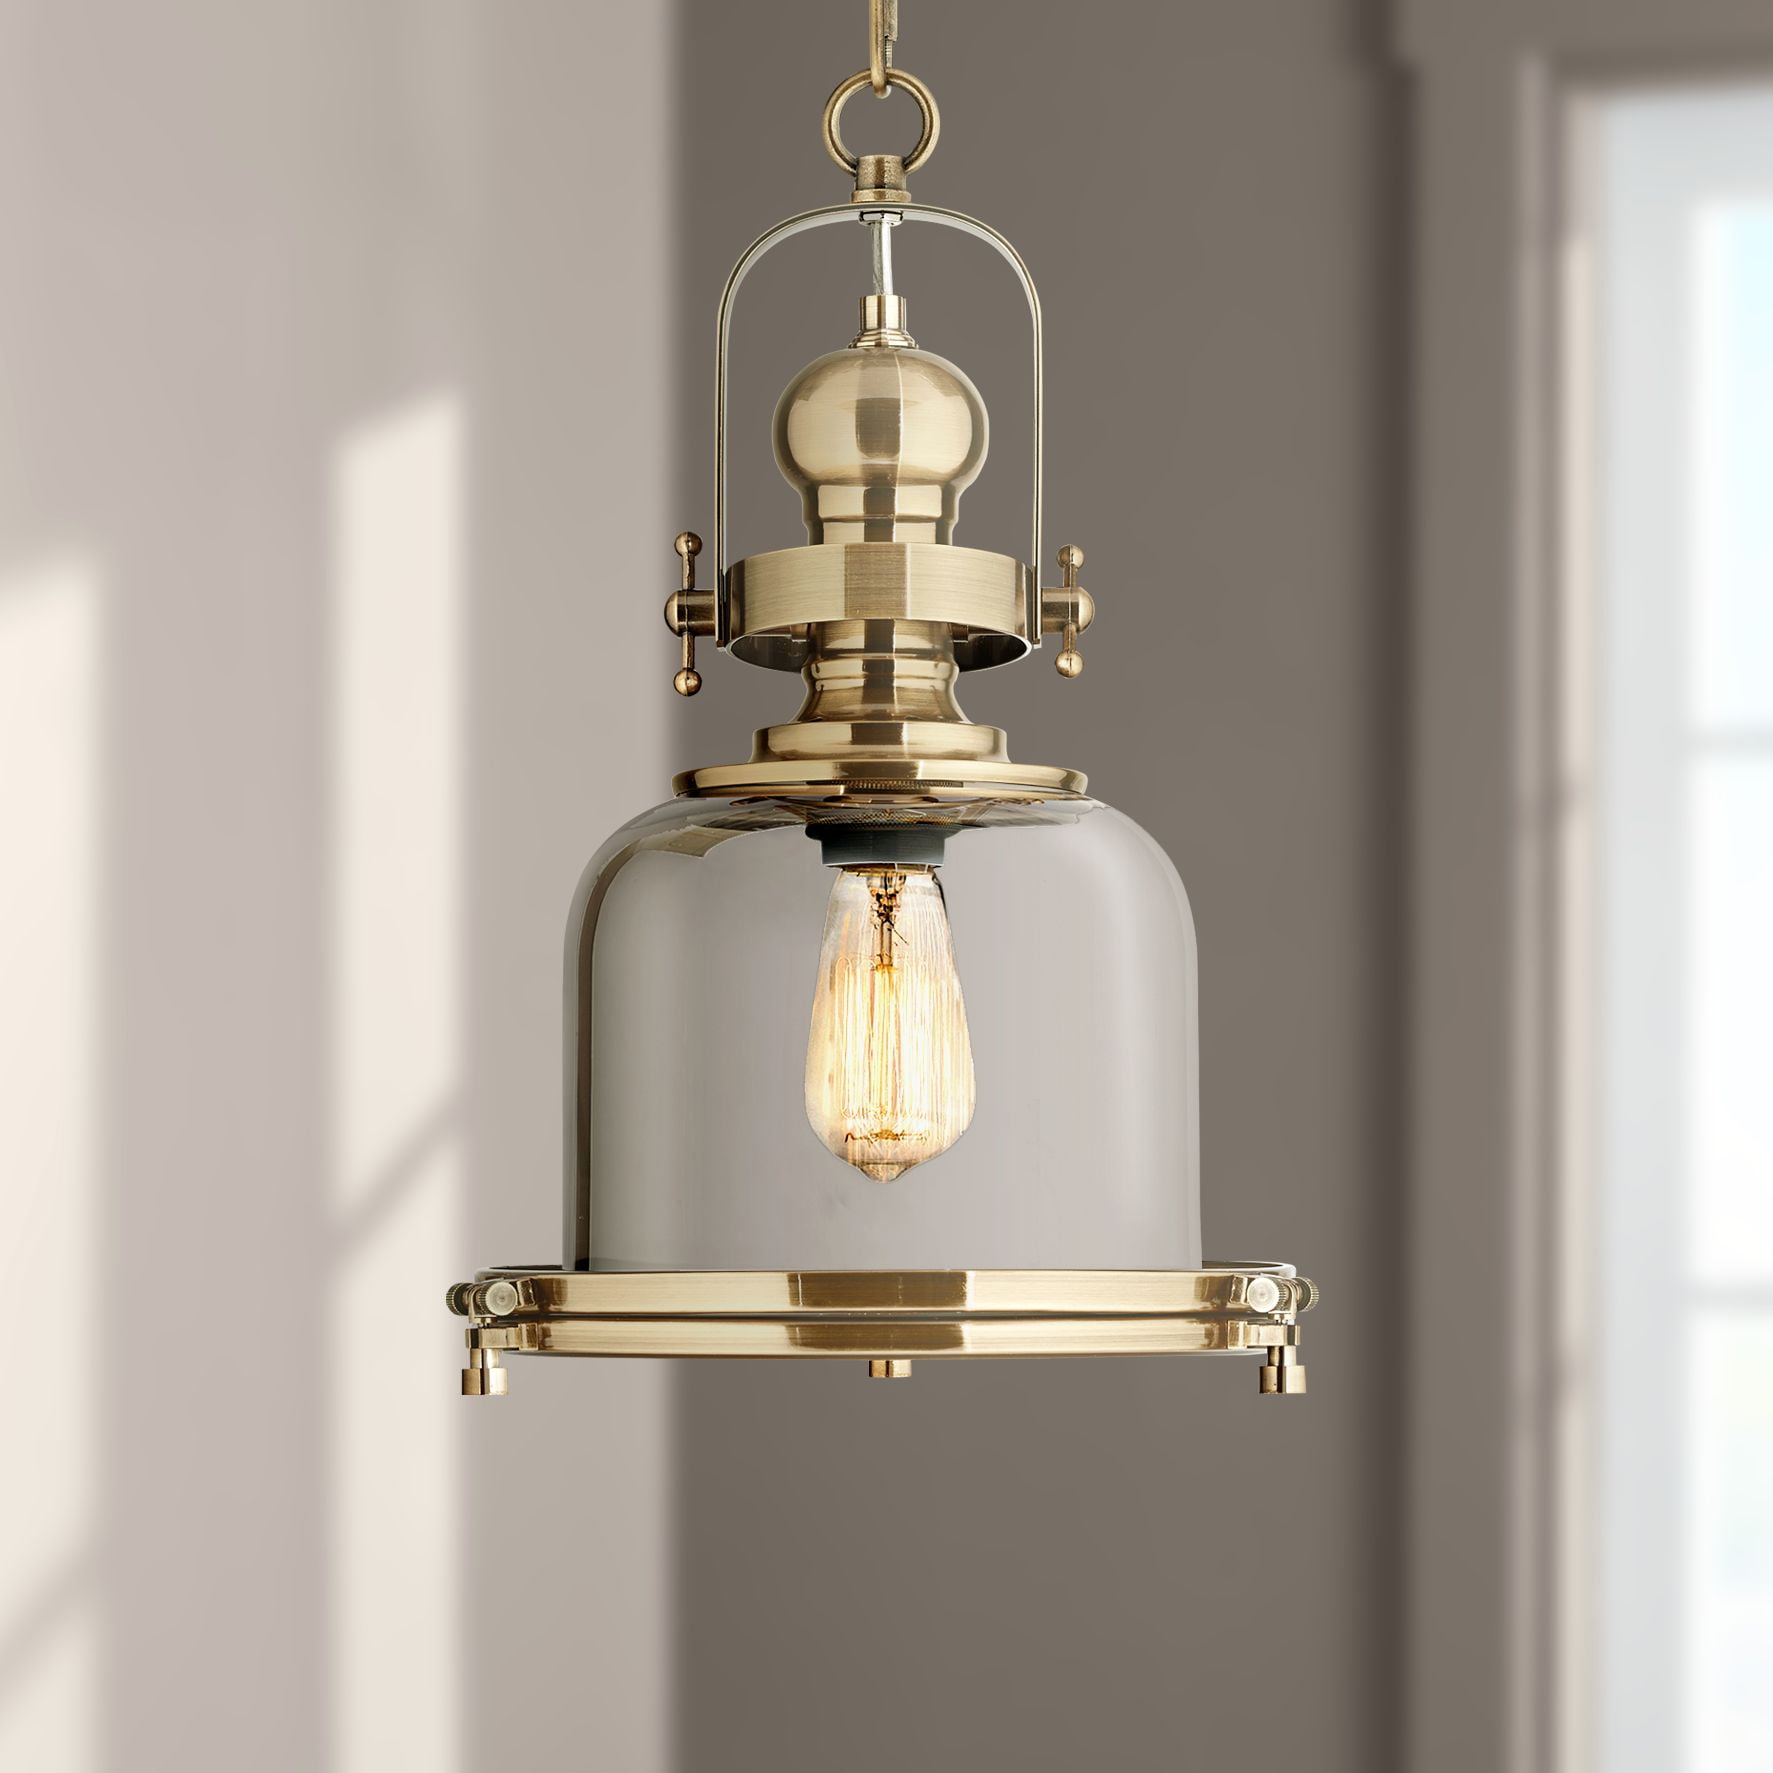  vintage kitchen pendant lighting